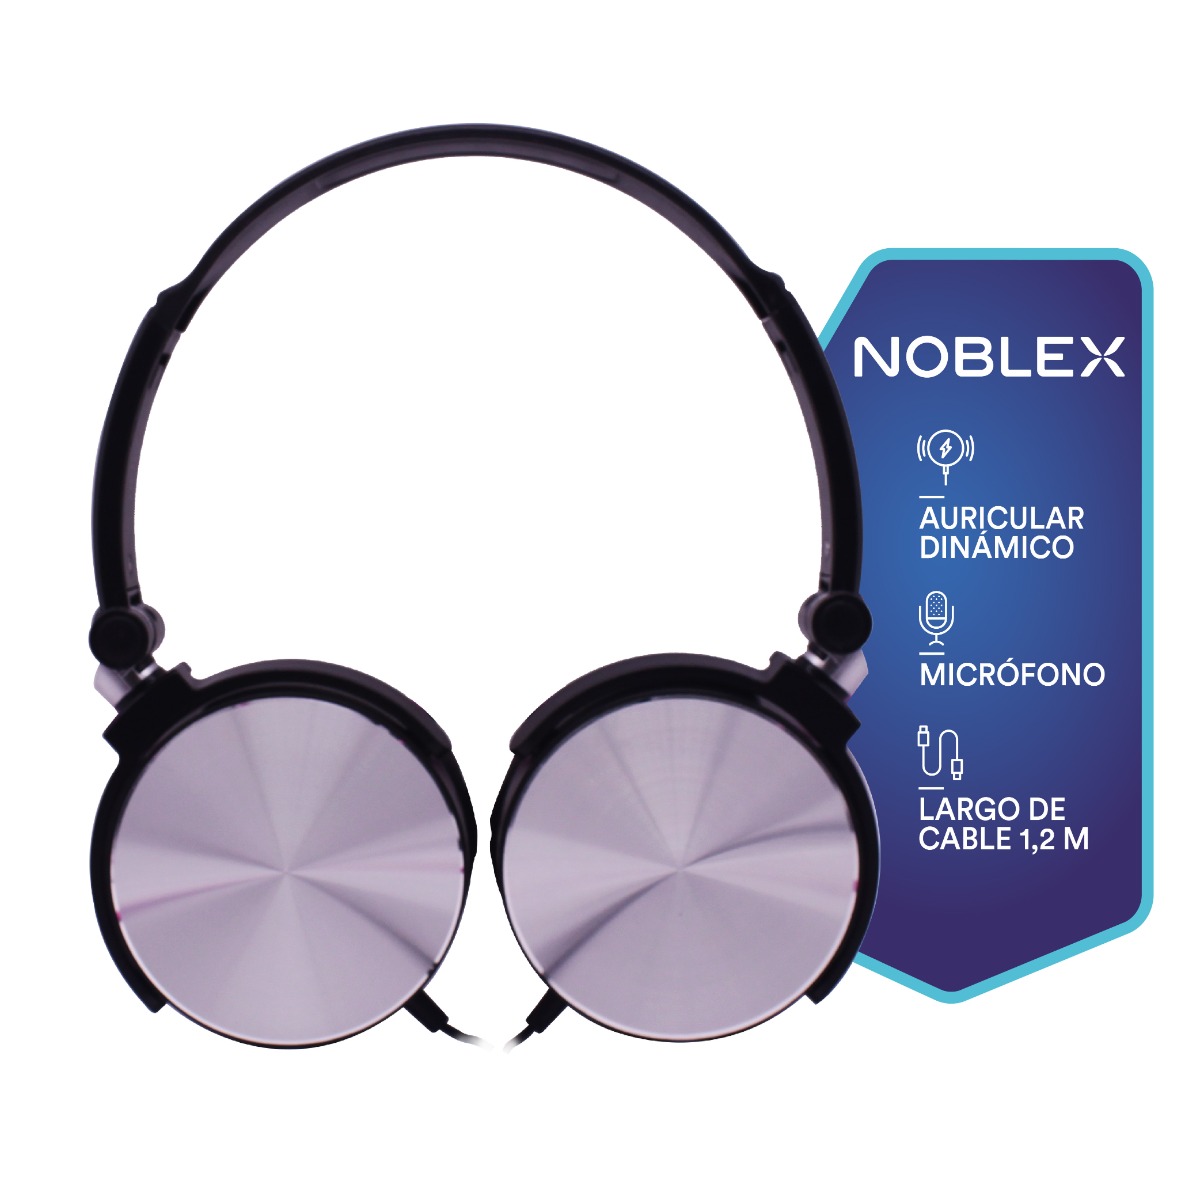 Noblex - Auricular Vincha Noblex con Micrófono Manos Libres Blanco